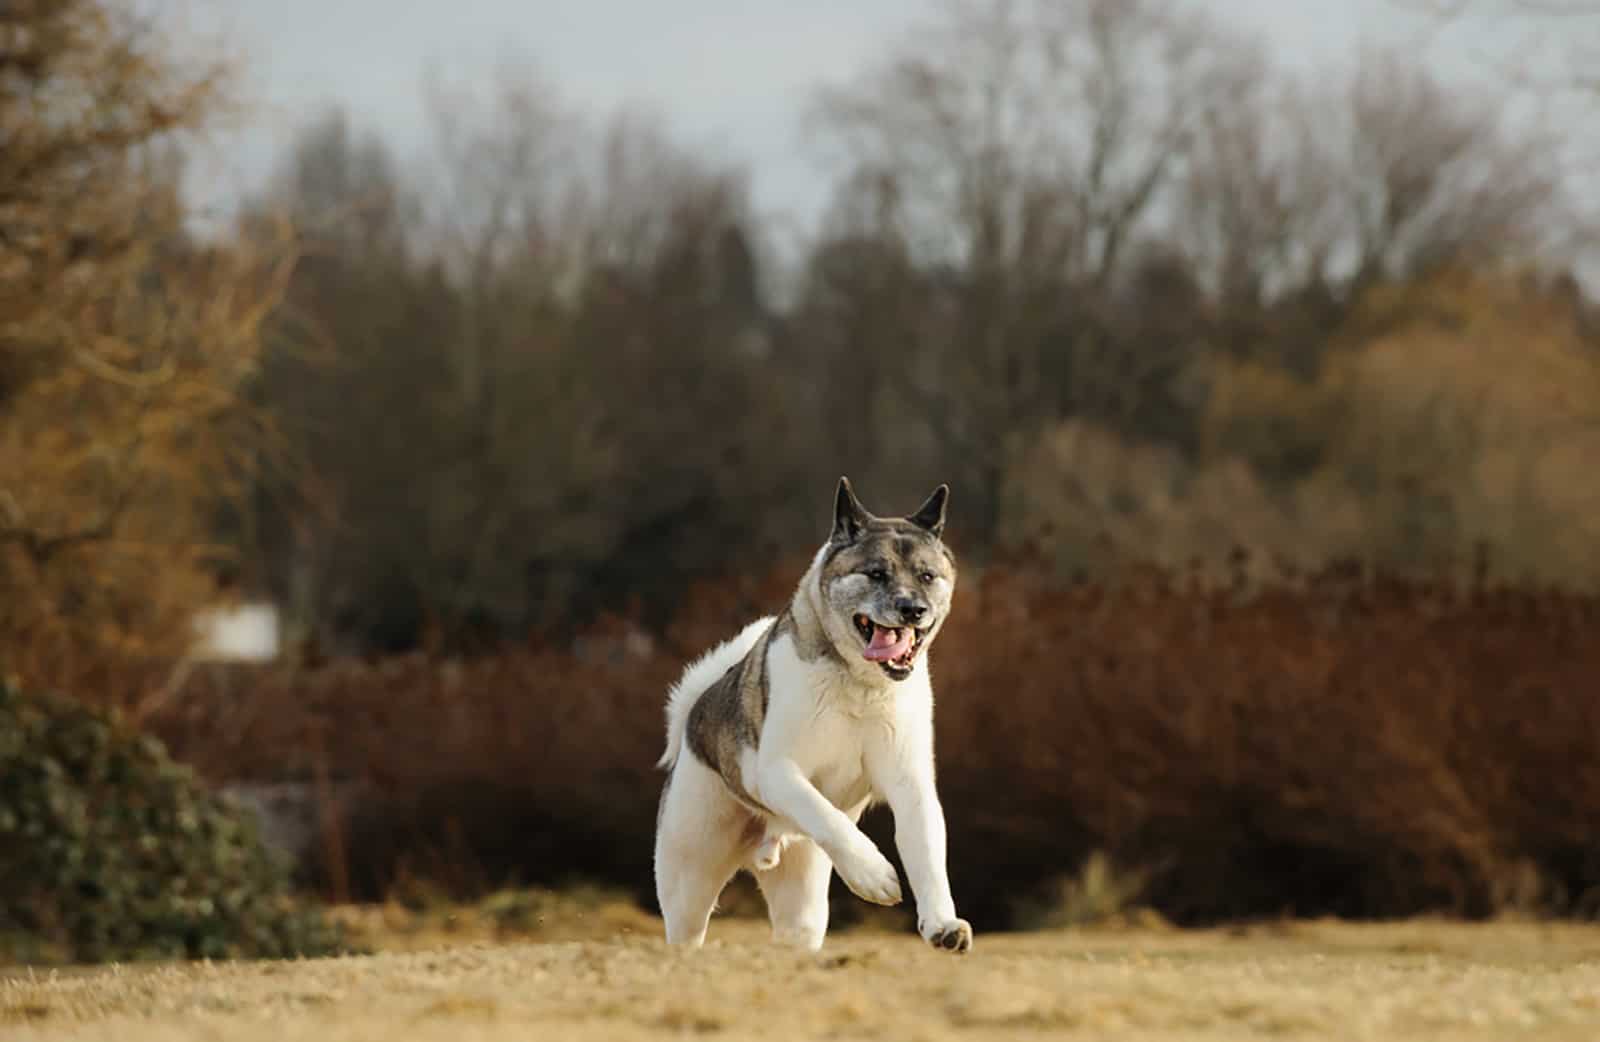 akita dog outdoor portrait running in natural field